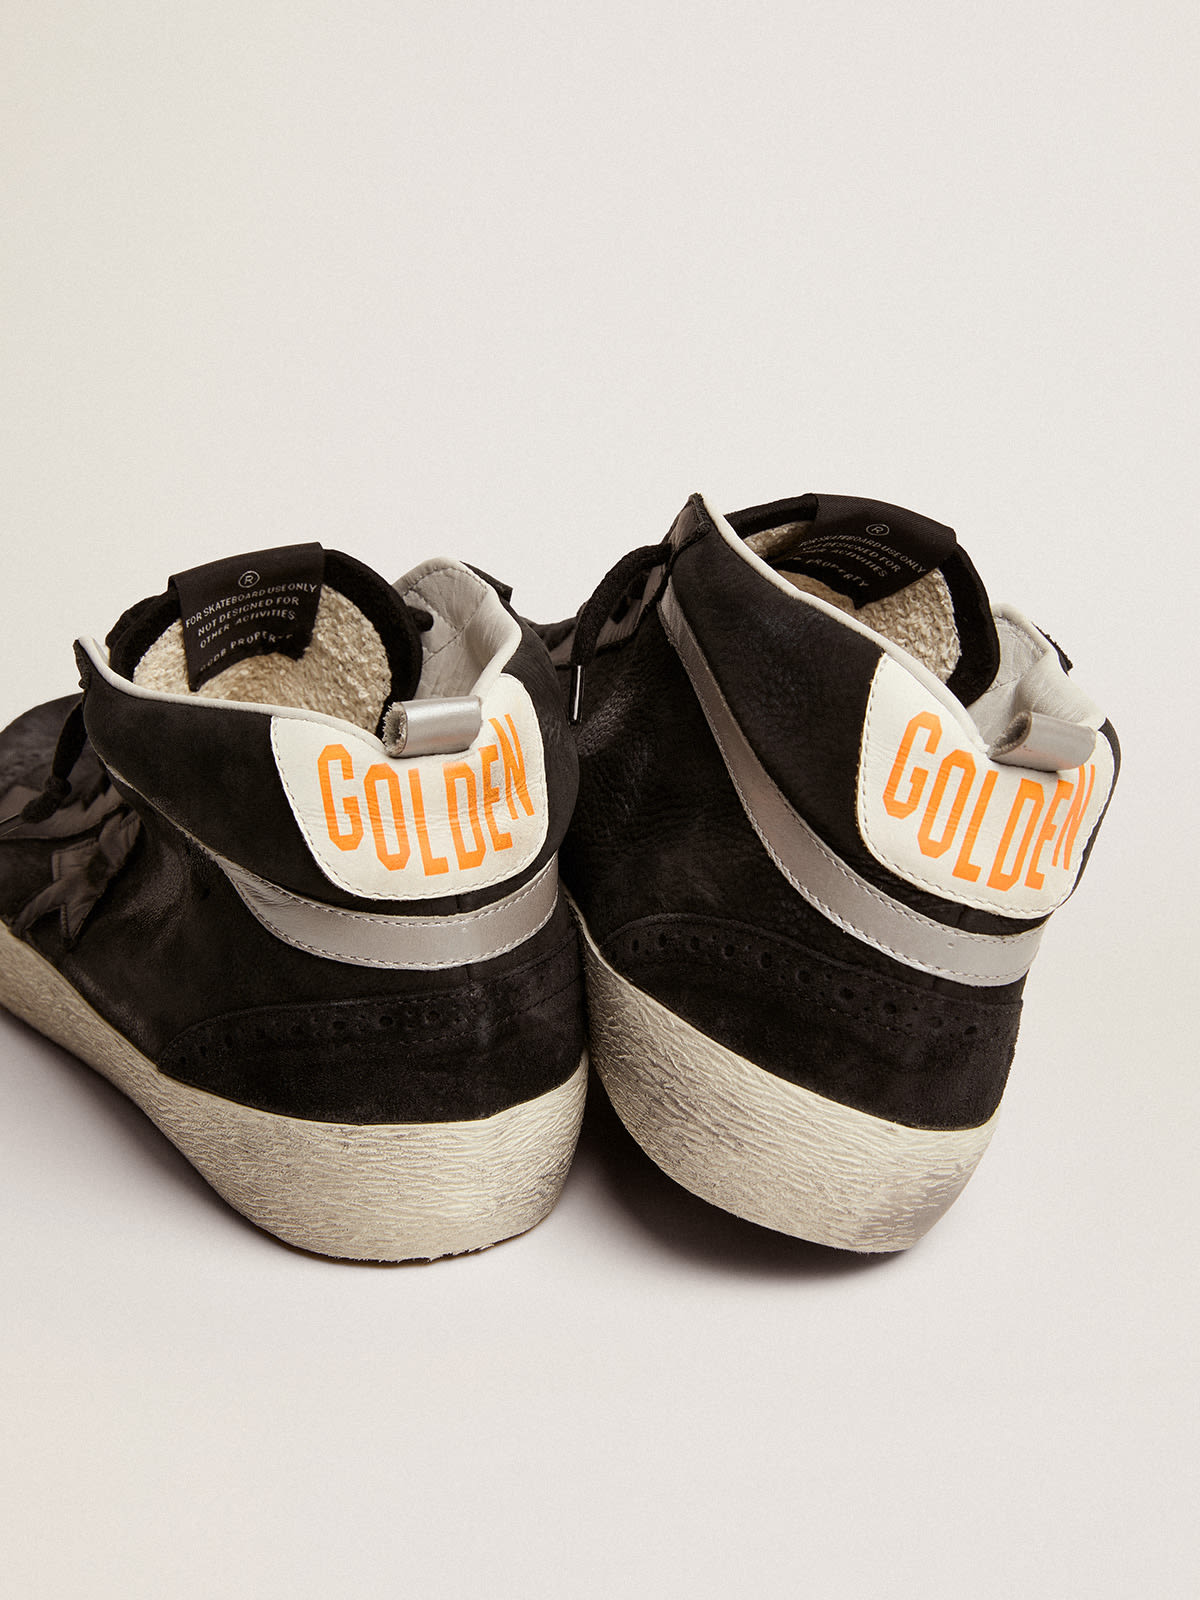 Golden Goose - Sneaker Mid Star in nabuk nero con stella in pelle nera e virgola in pelle laminata color argento in 